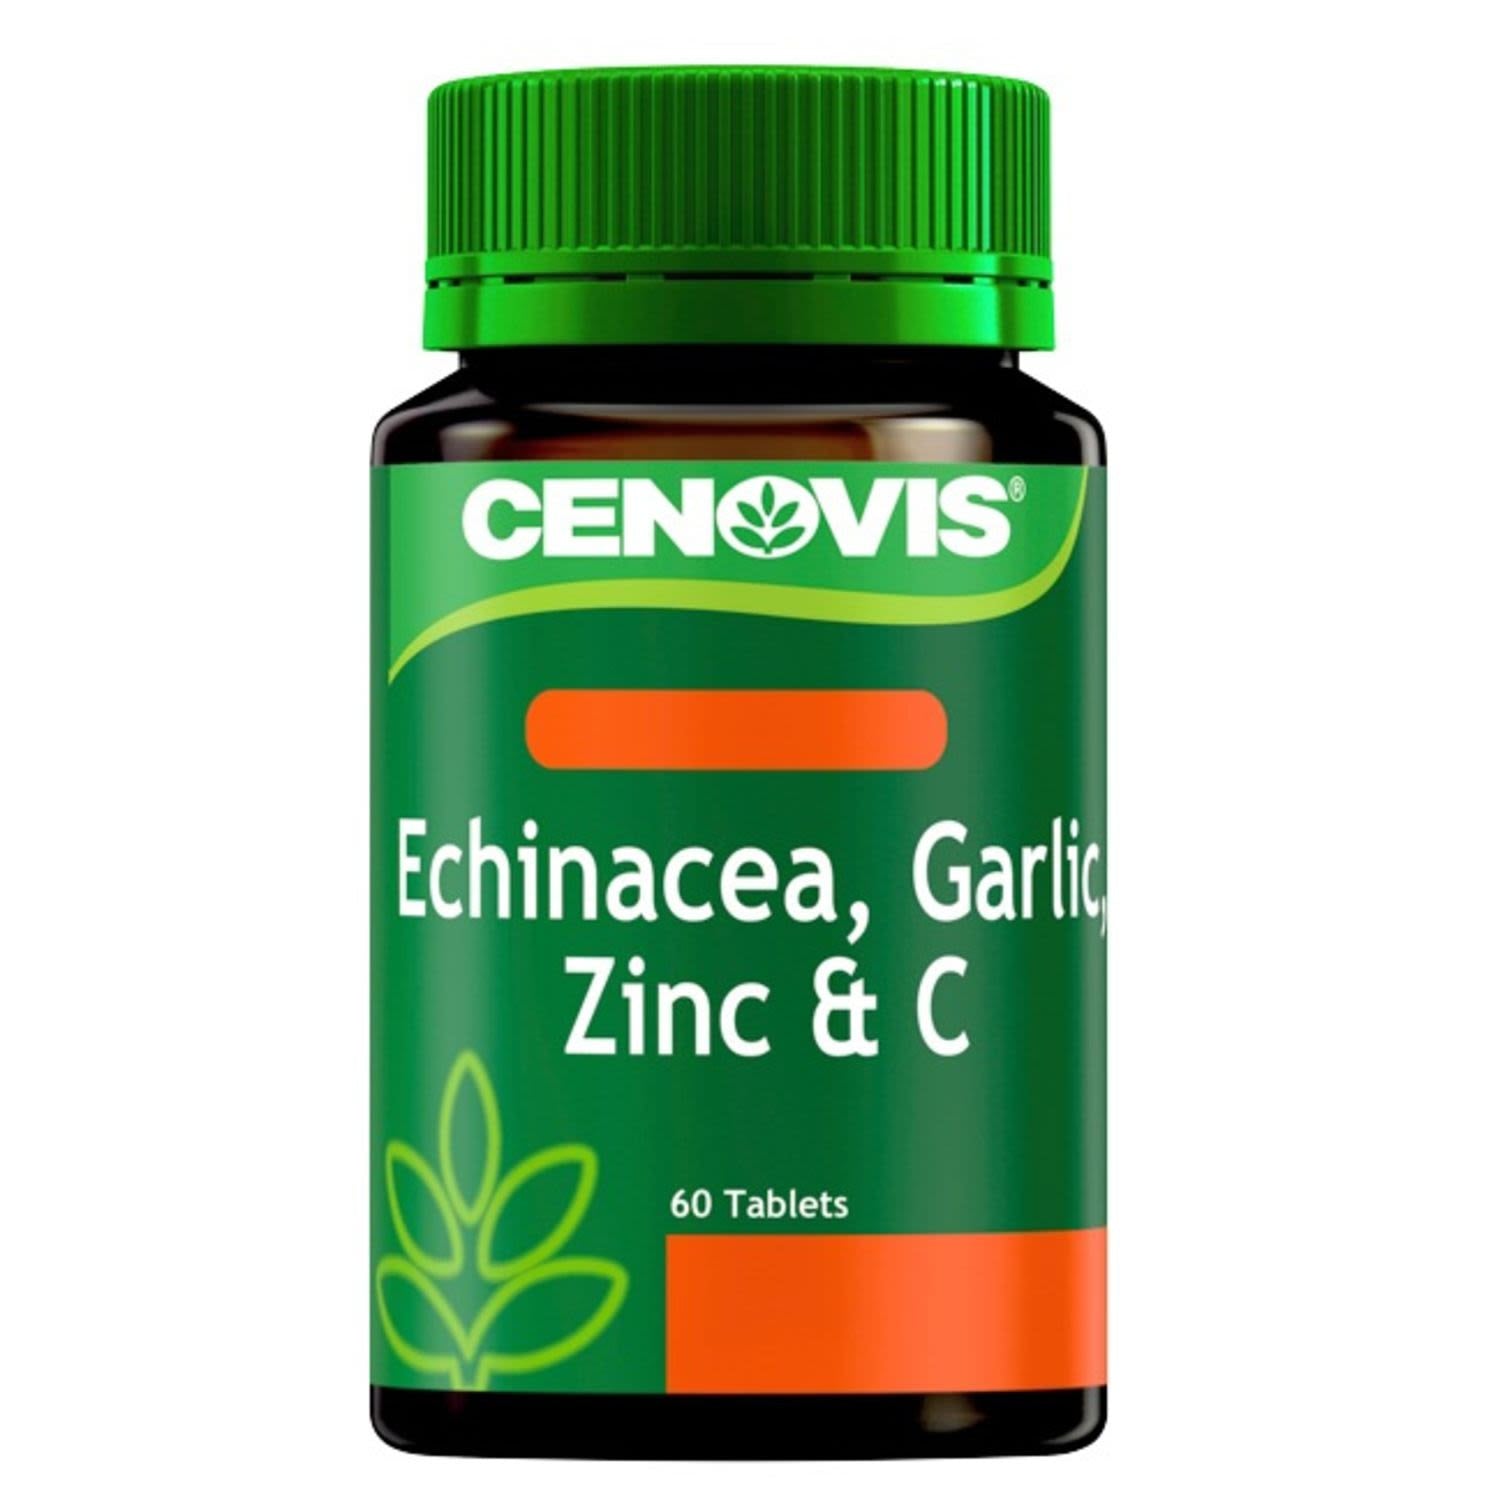 Cenovis Echinacea Garlic Zinc & C Tablets 60pk